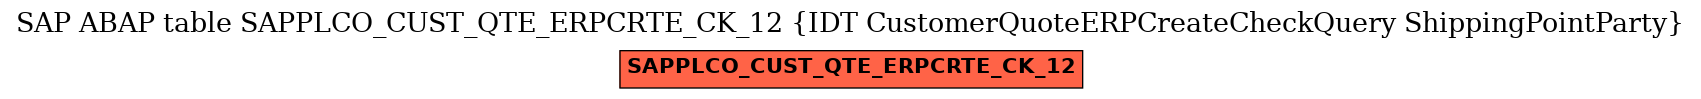 E-R Diagram for table SAPPLCO_CUST_QTE_ERPCRTE_CK_12 (IDT CustomerQuoteERPCreateCheckQuery ShippingPointParty)